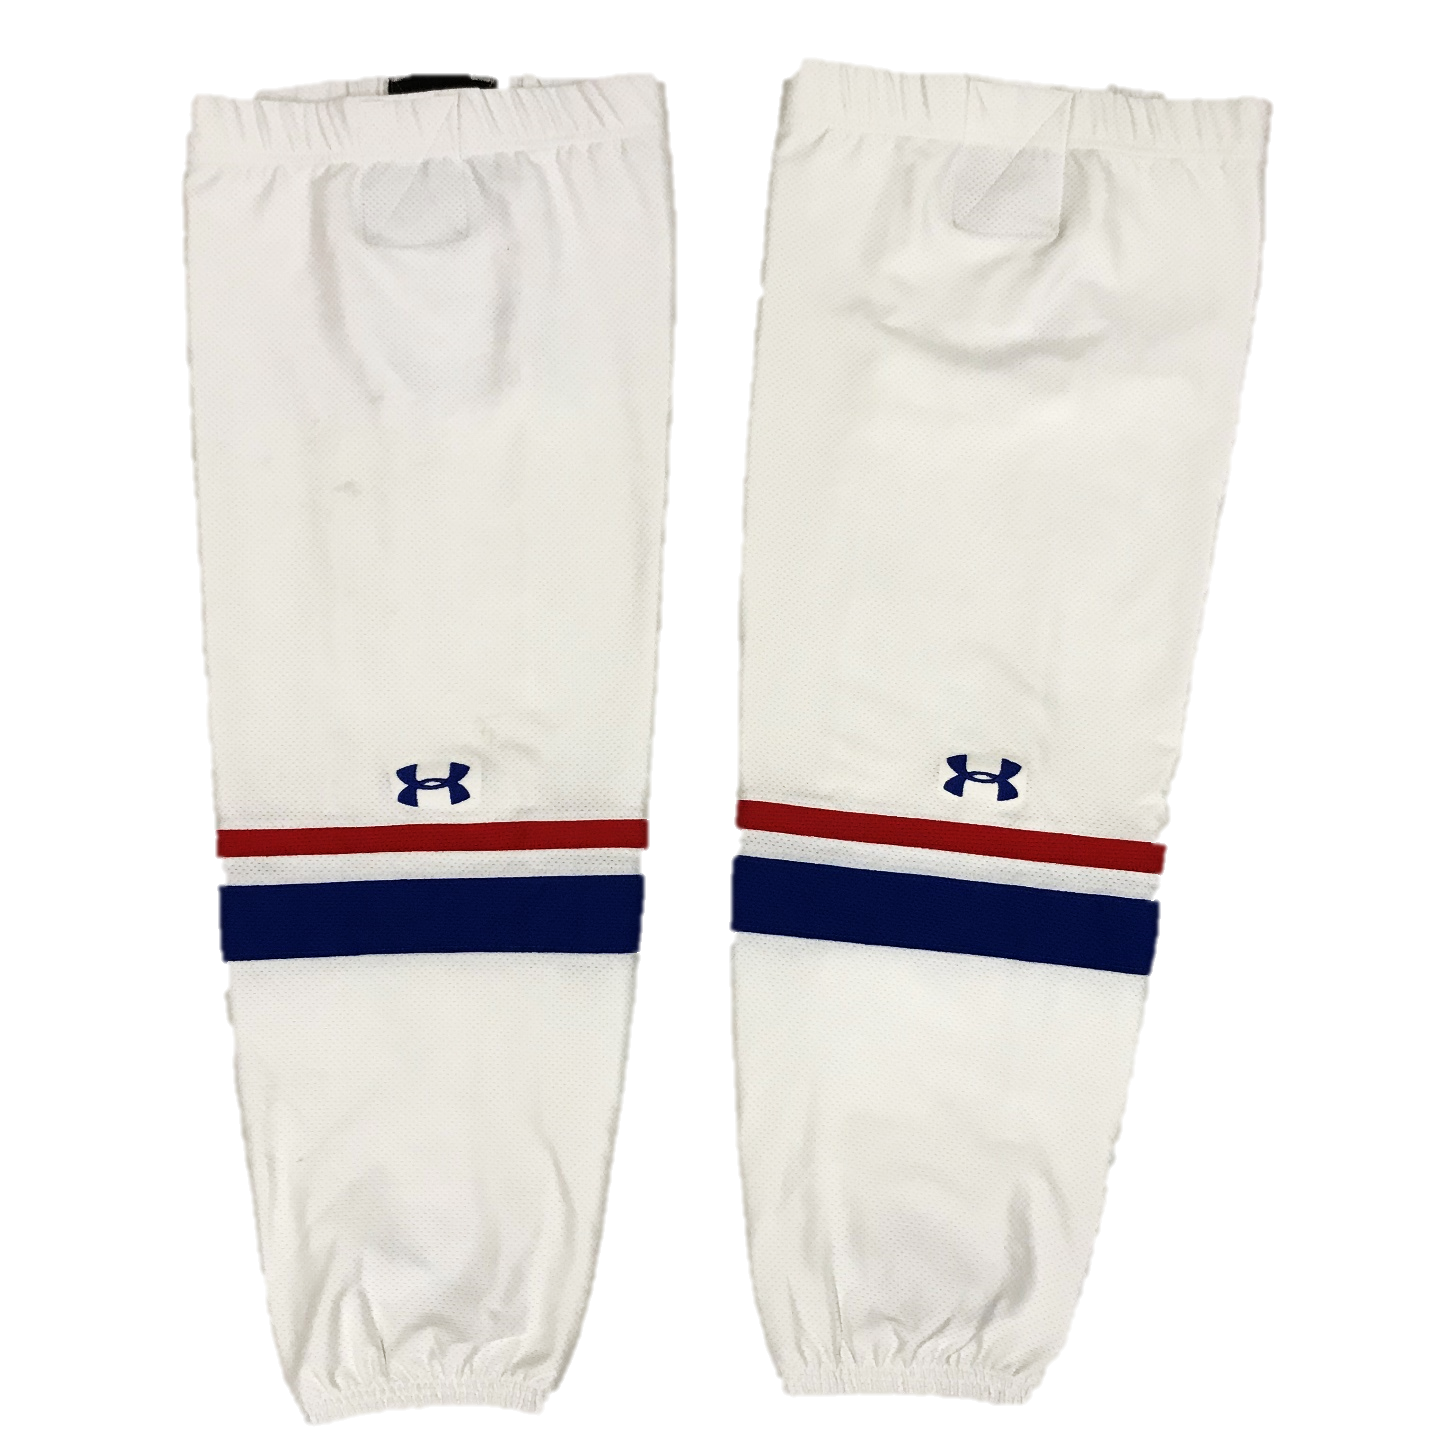 Howies Hockey White Sock Tape – HockeyStickMan